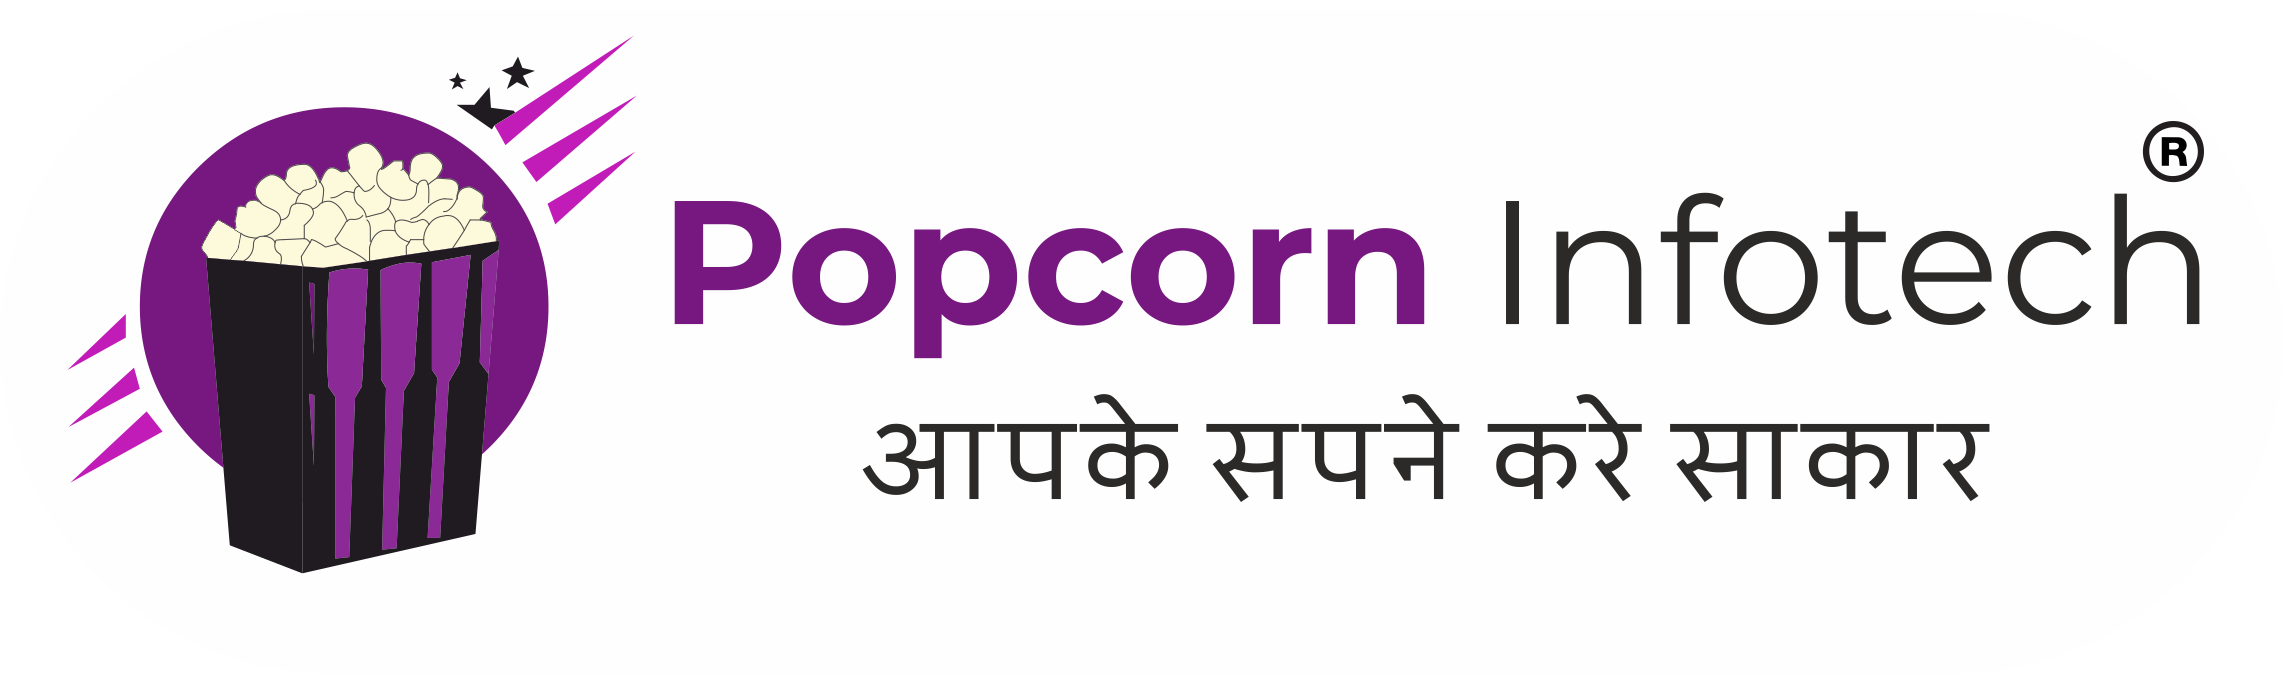 Popcorn infotech logo
